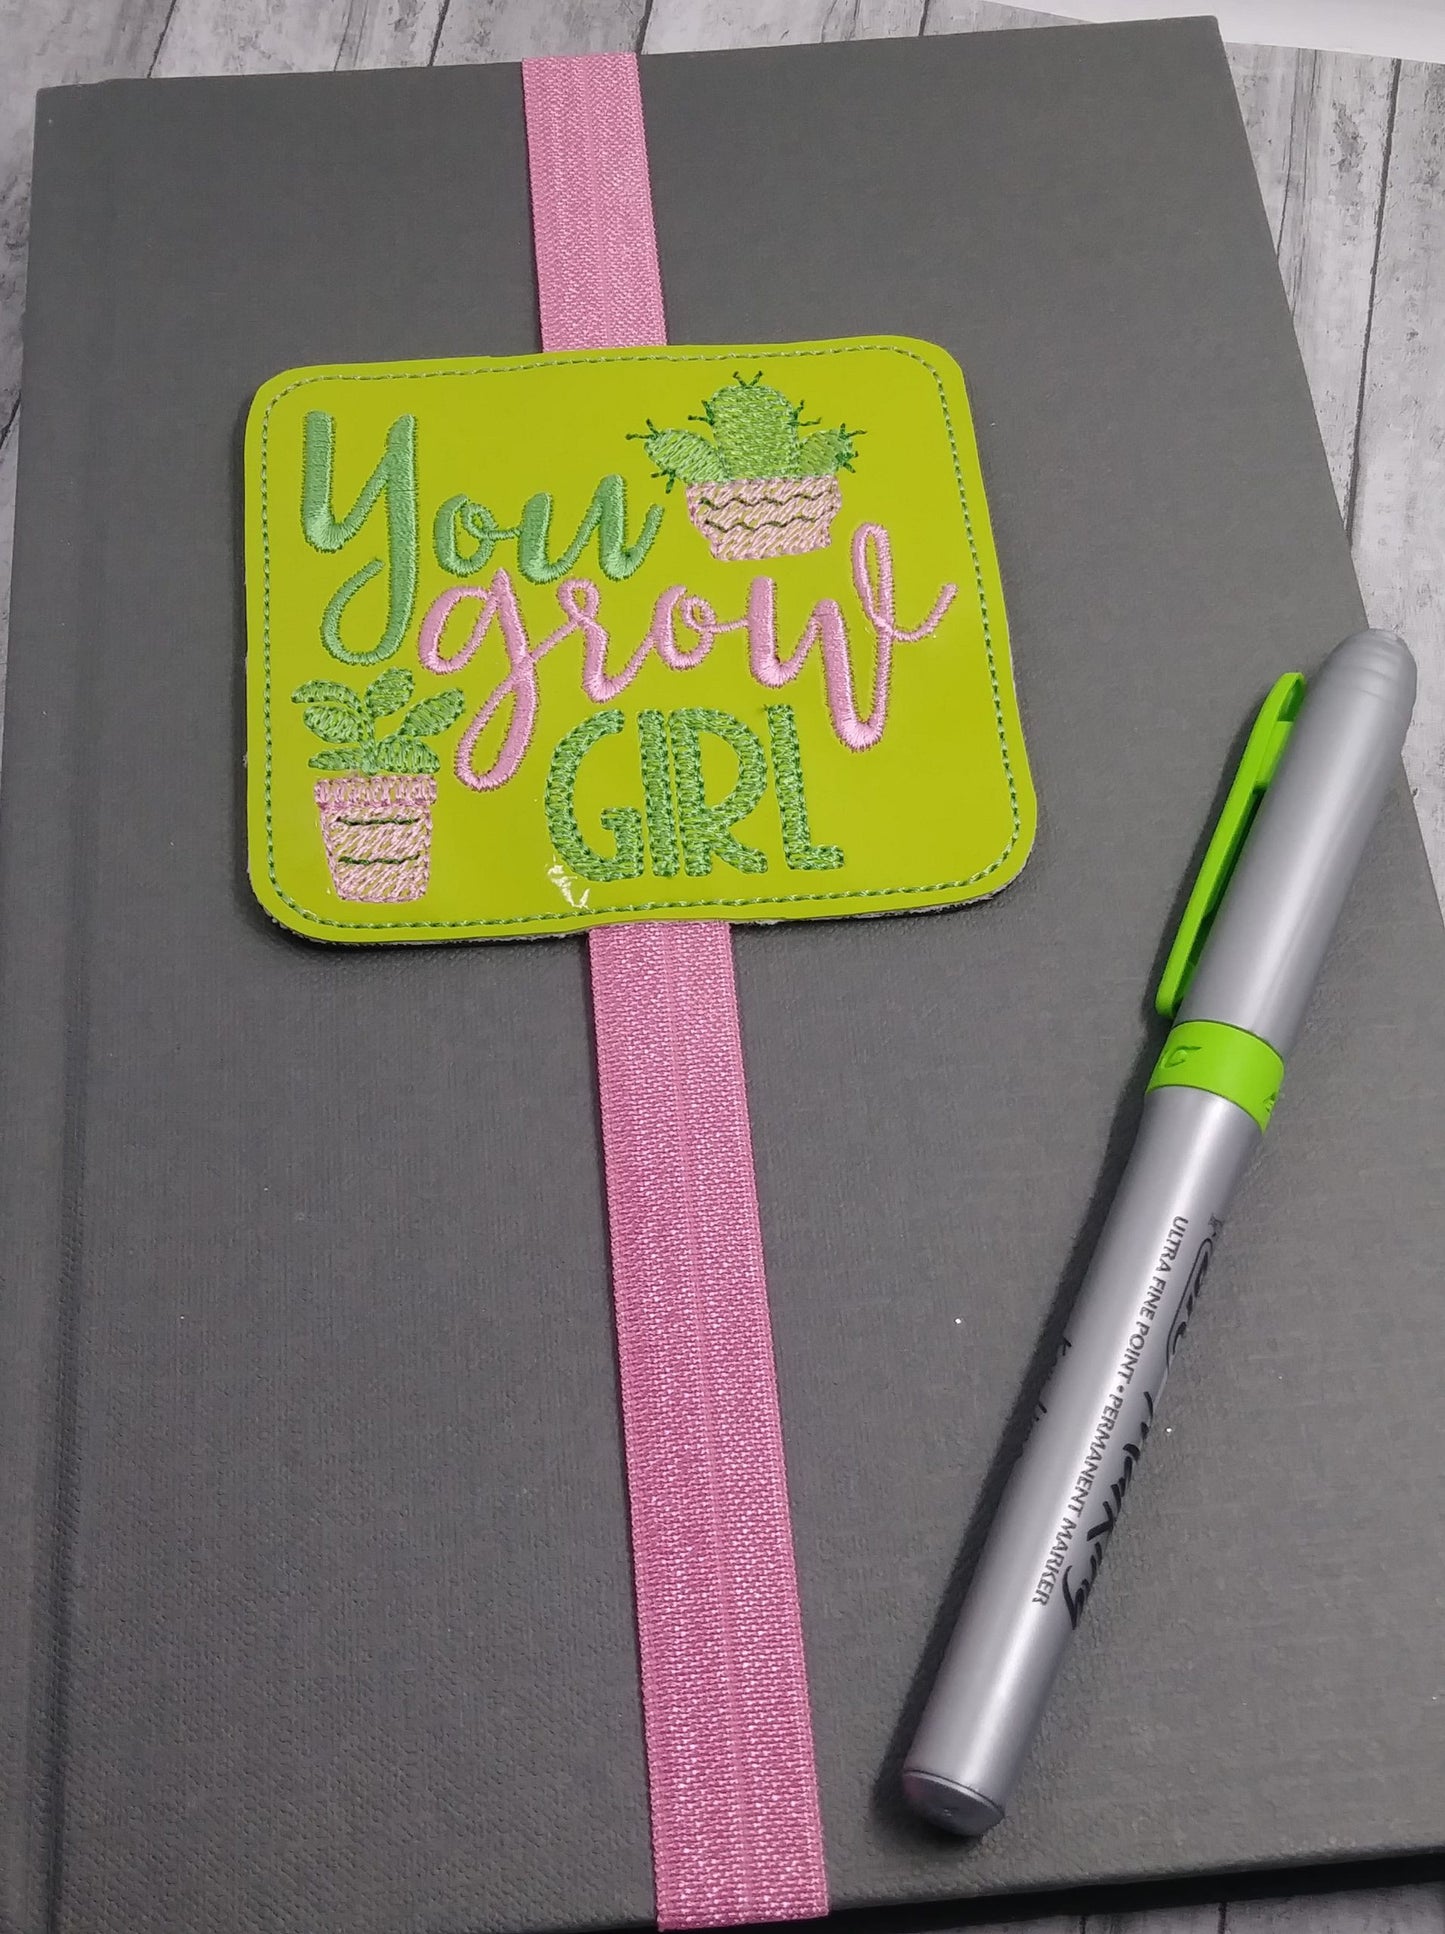 You Grow Girl Book Band - Embroidery Design, Digital File